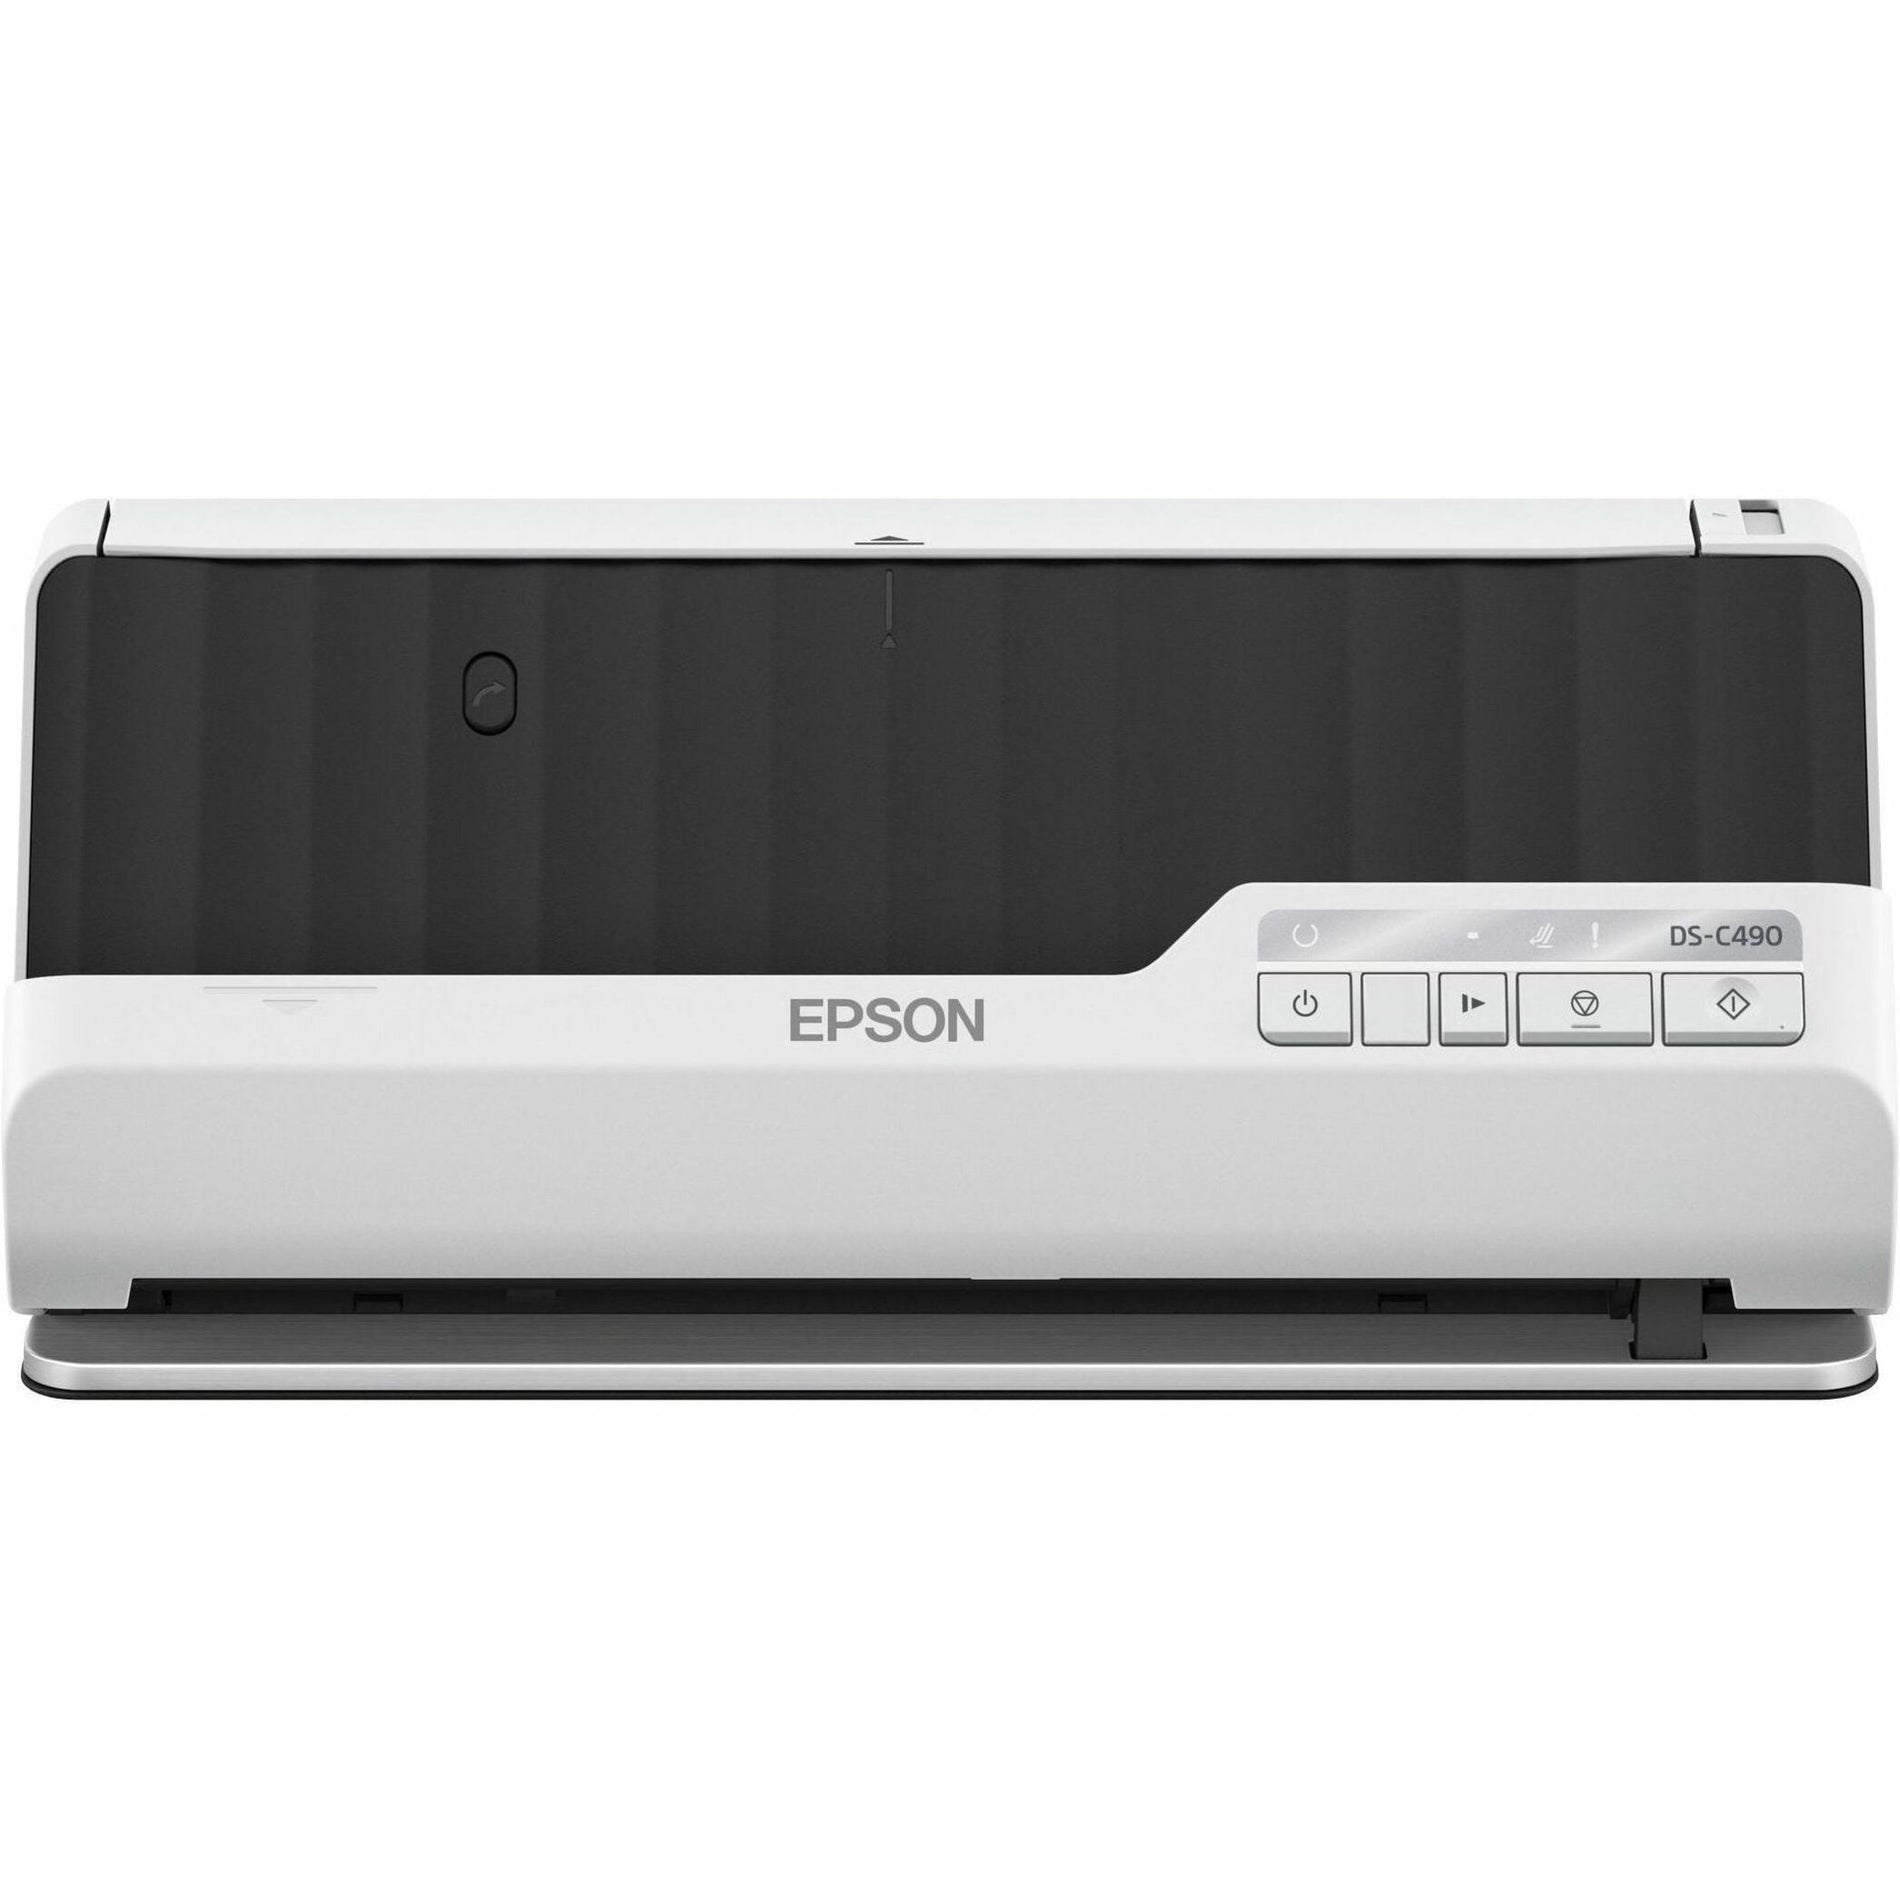 Epson B11B271201 DS-C490 Sheetfed Scanner - High-Speed, Duplex Scanning, 600 dpi Optical